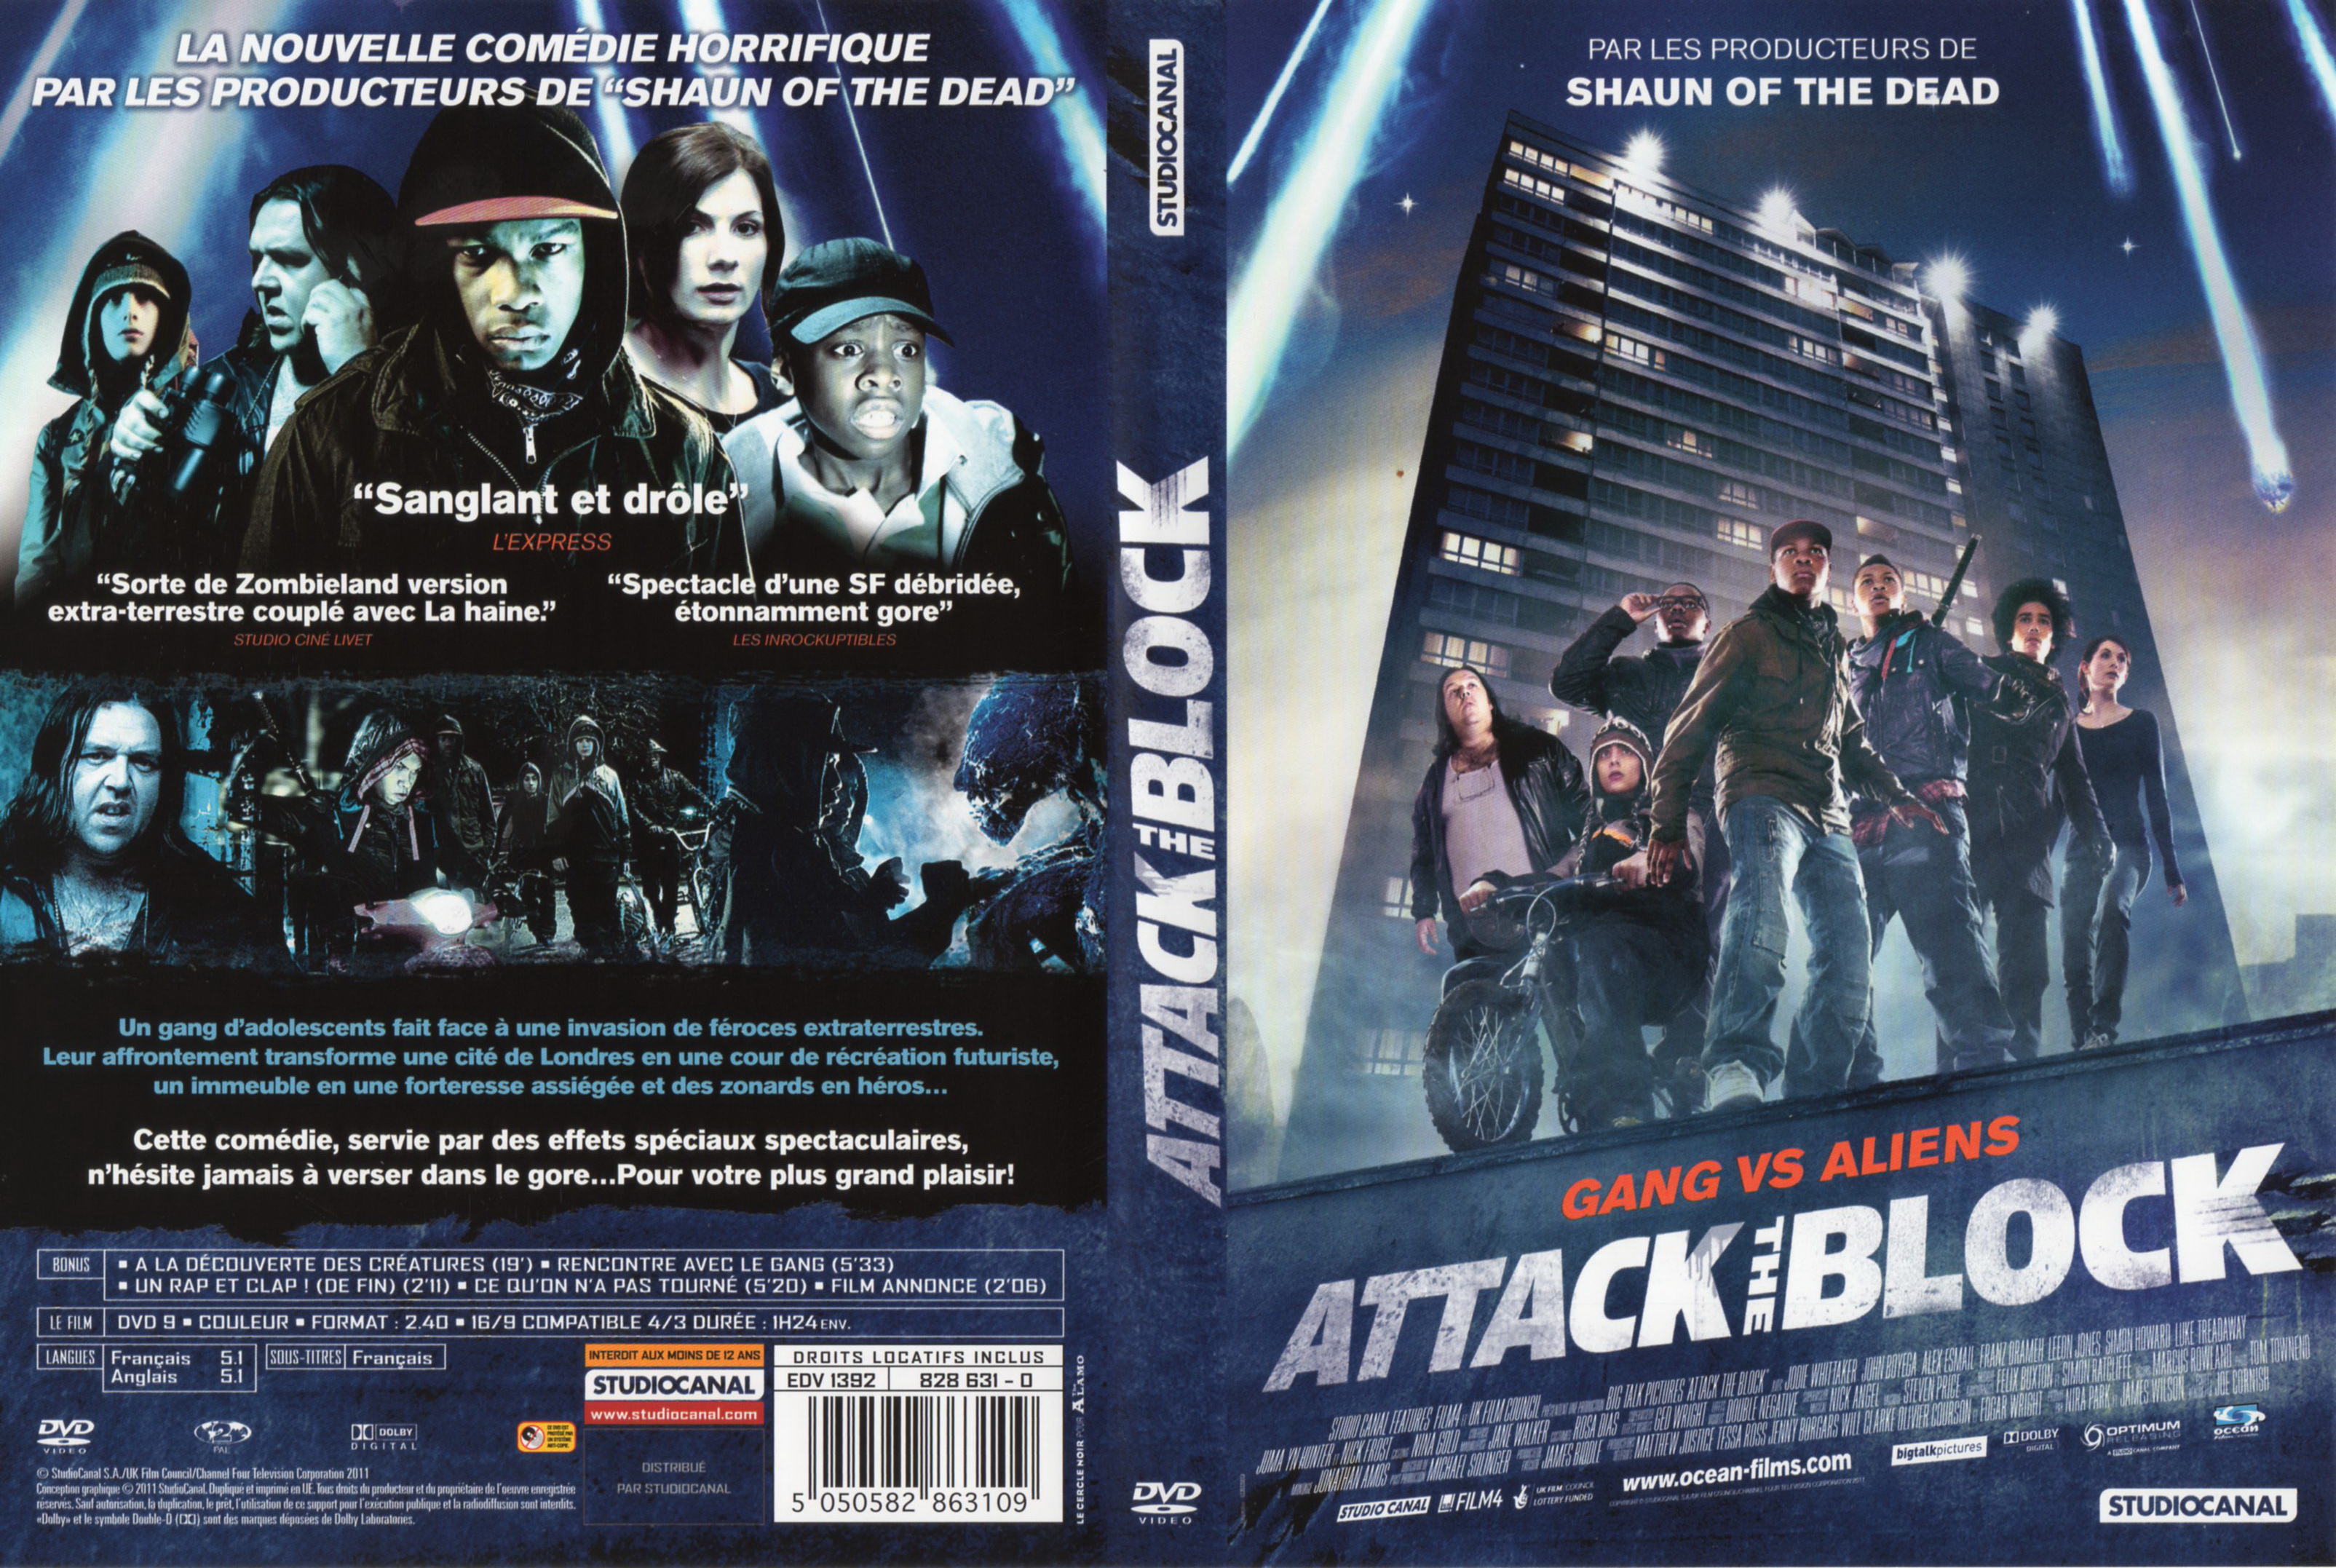 Jaquette DVD Attack the block